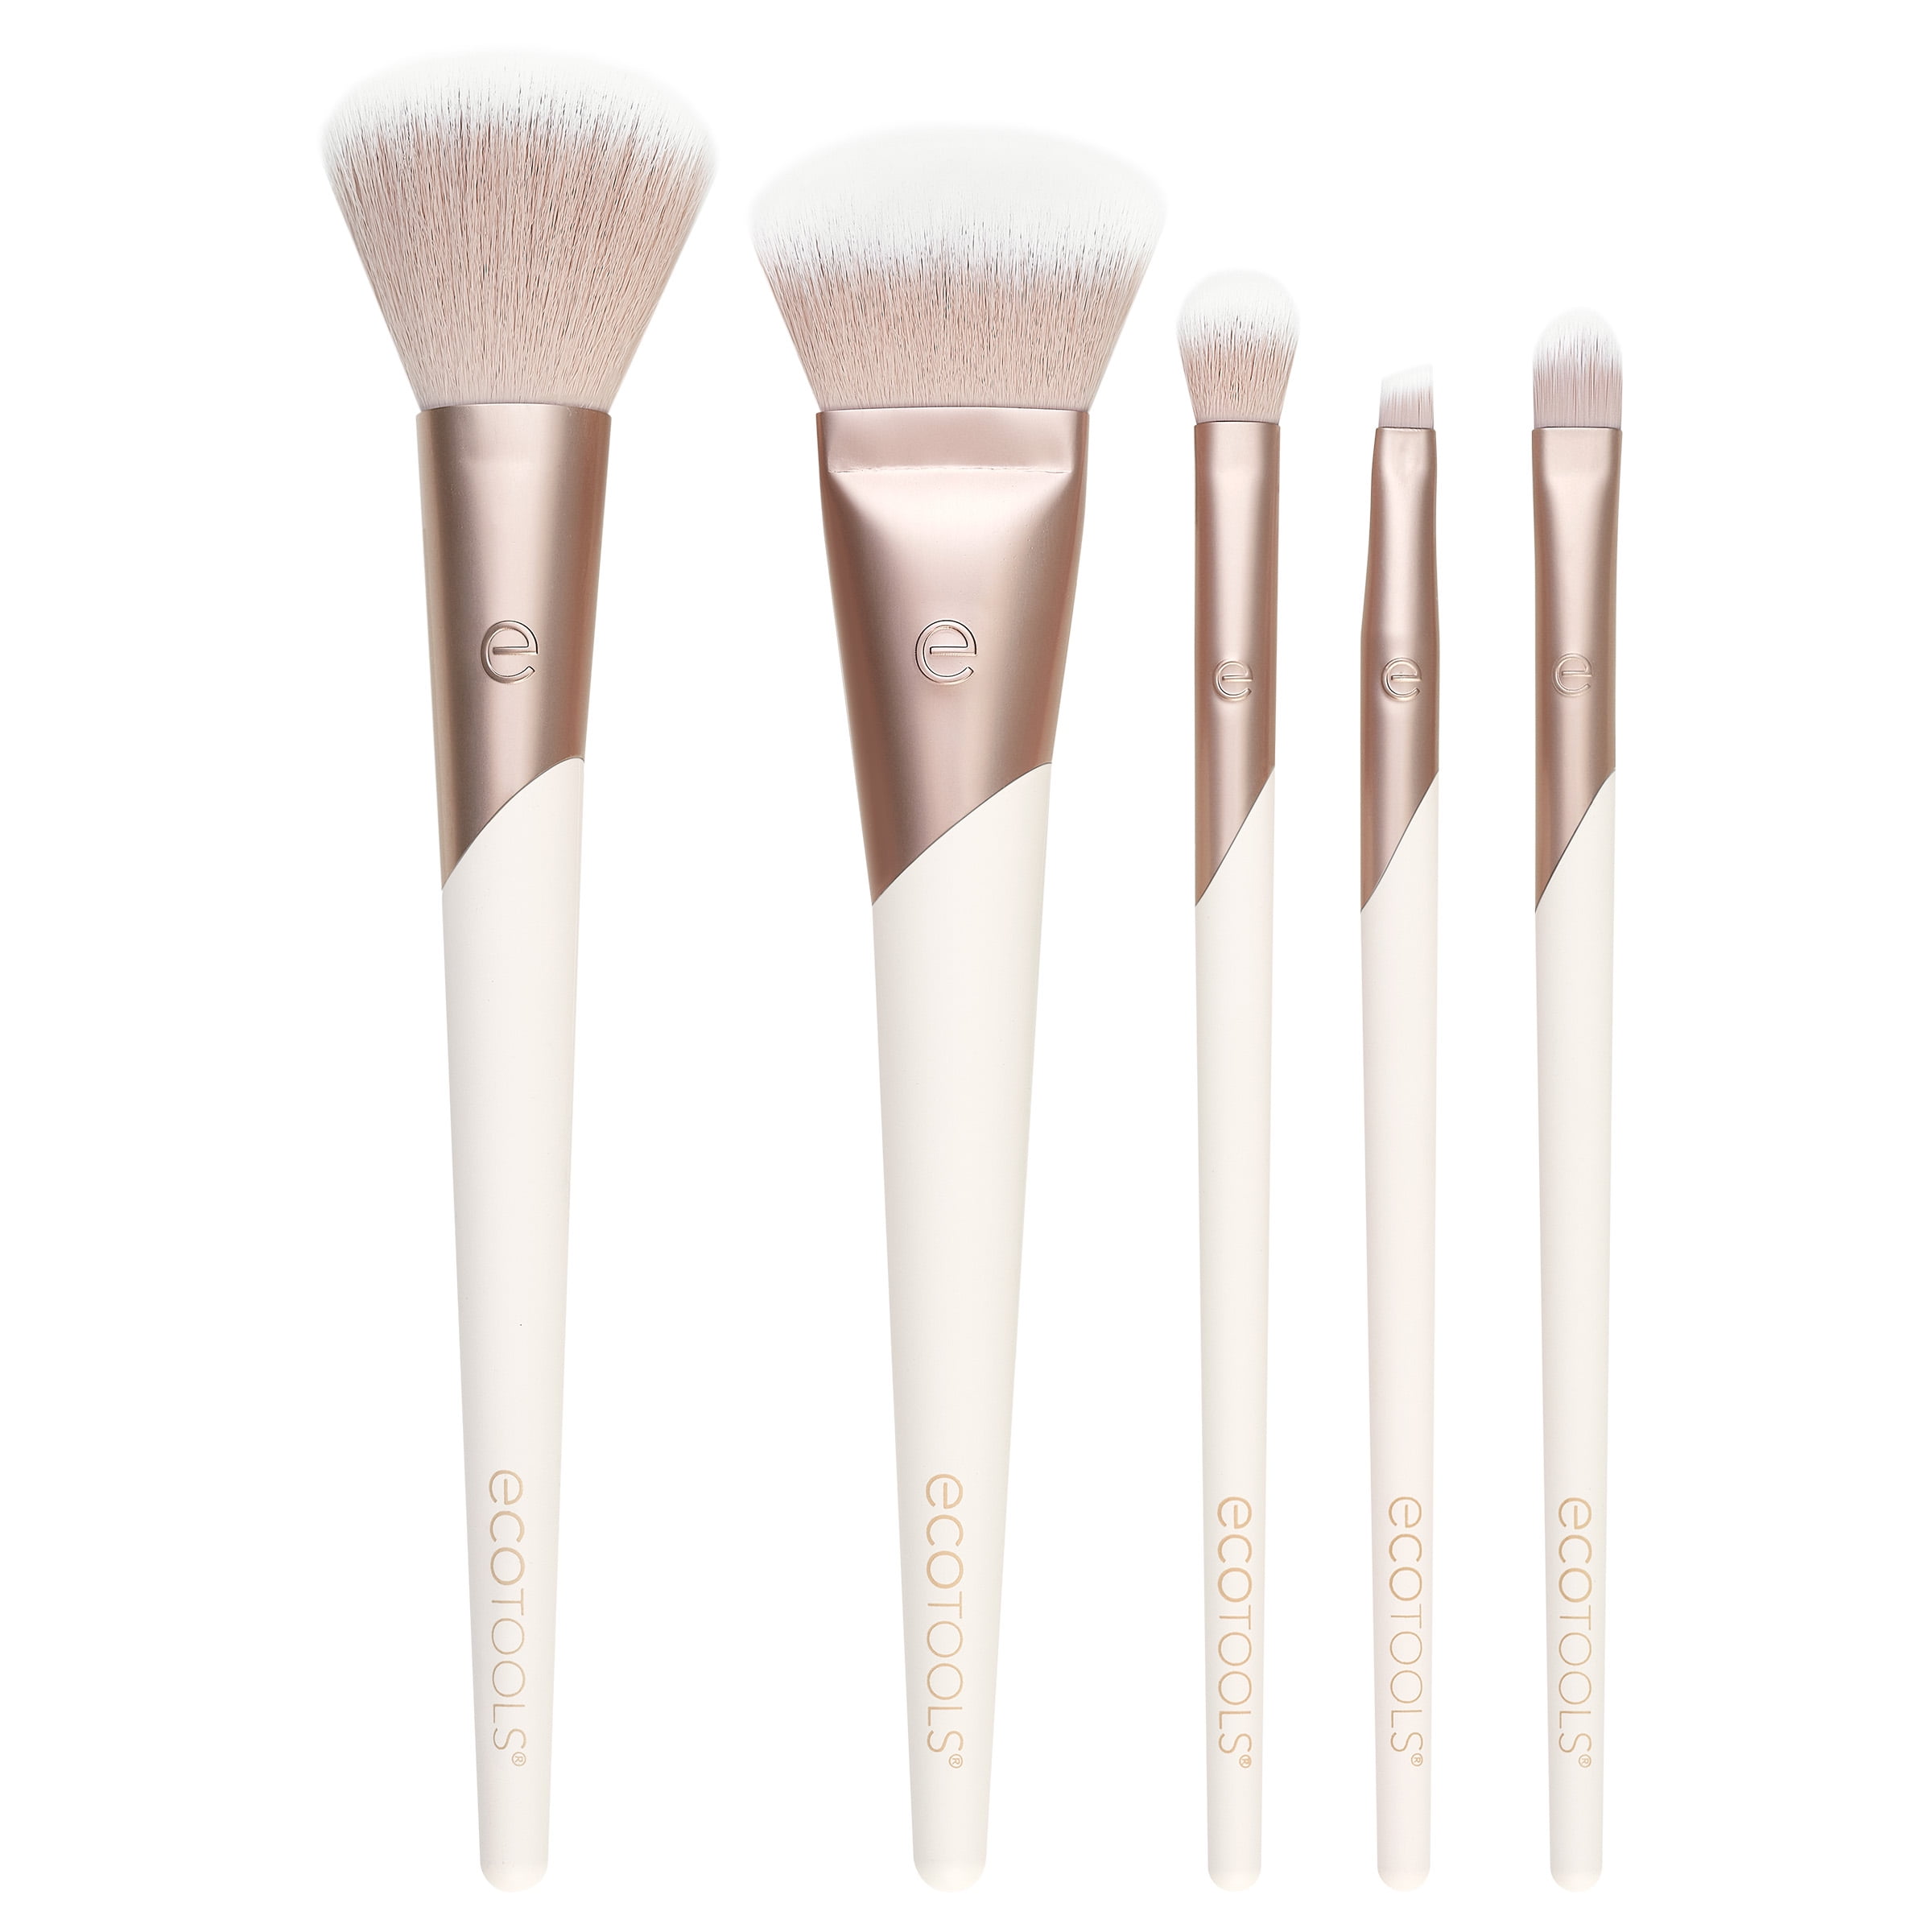 EcoTools Luxe Natural Elegance Professional Face Makeup & Foundation Brush Kit, 5 Piece Set